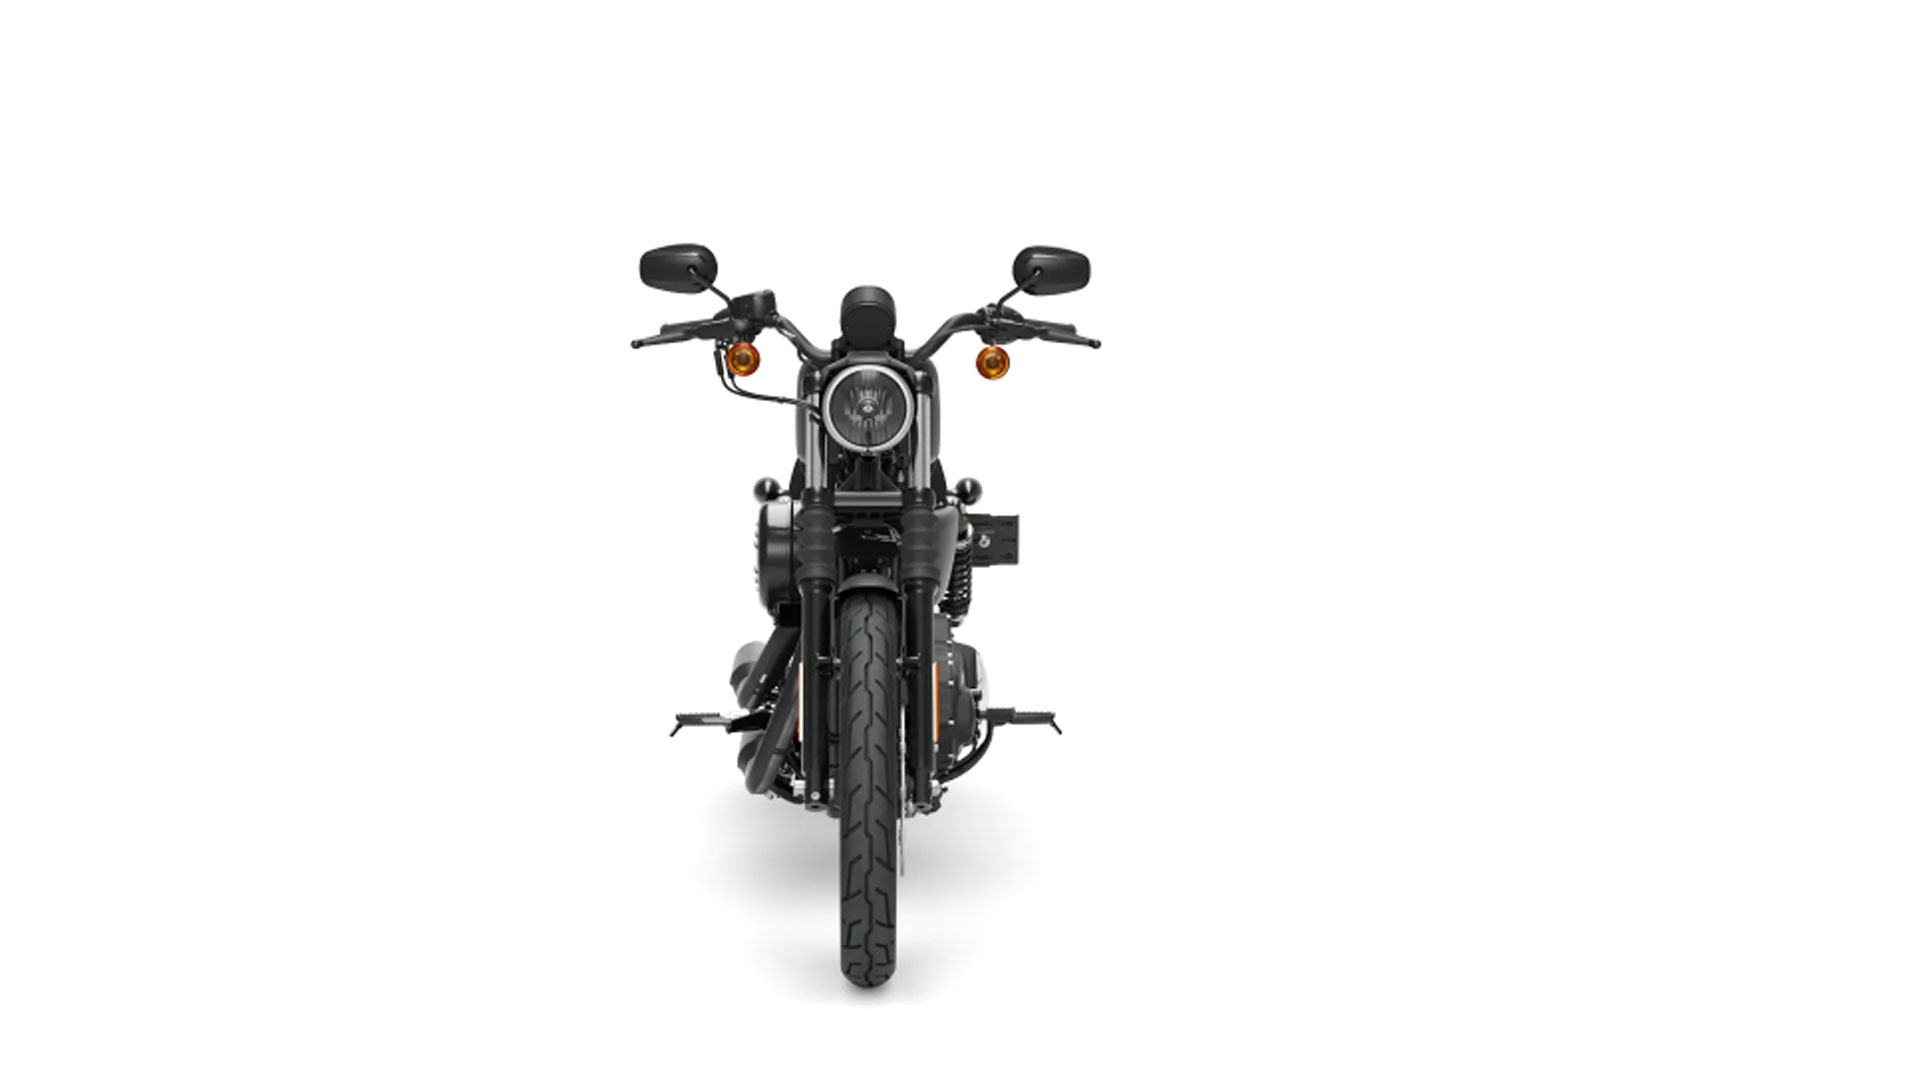 Harley-Davidson Iron 883 2020 STD